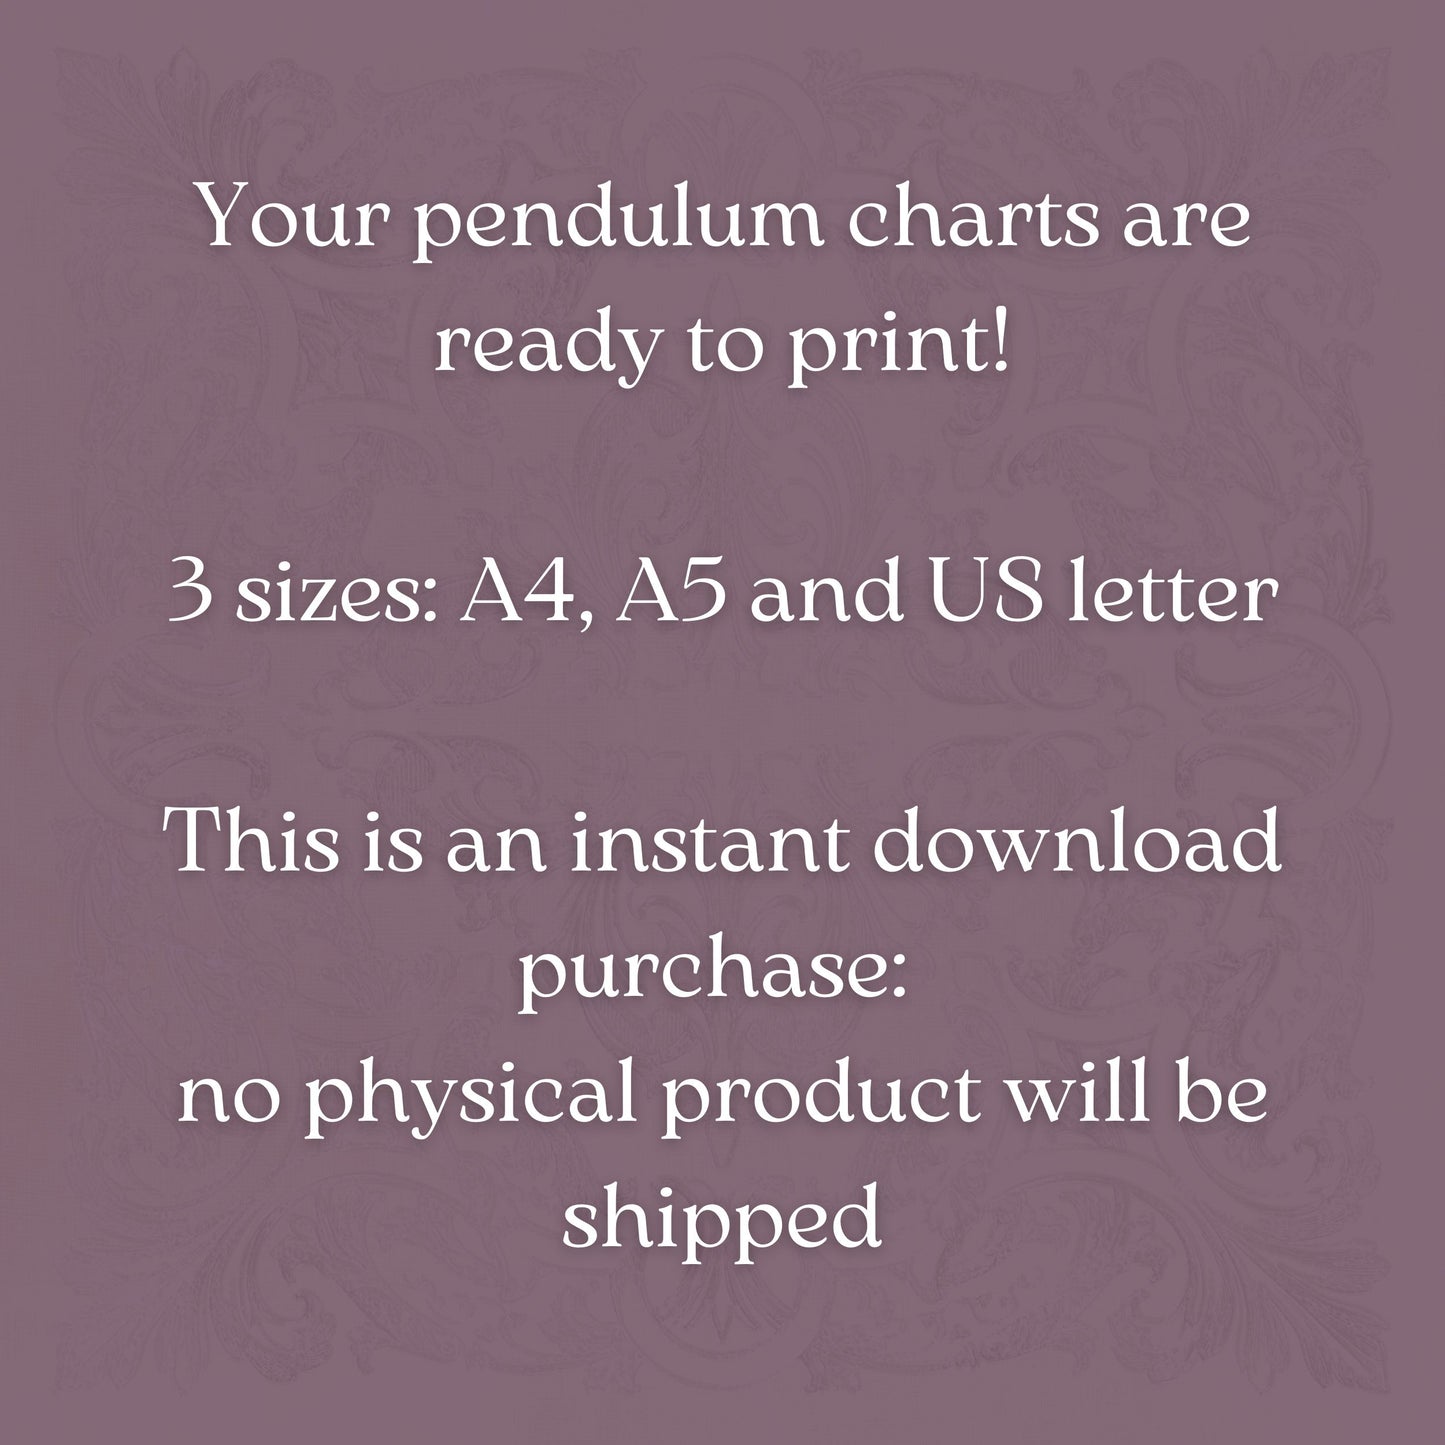 Chakras printable pendulum charts Baguette Magick